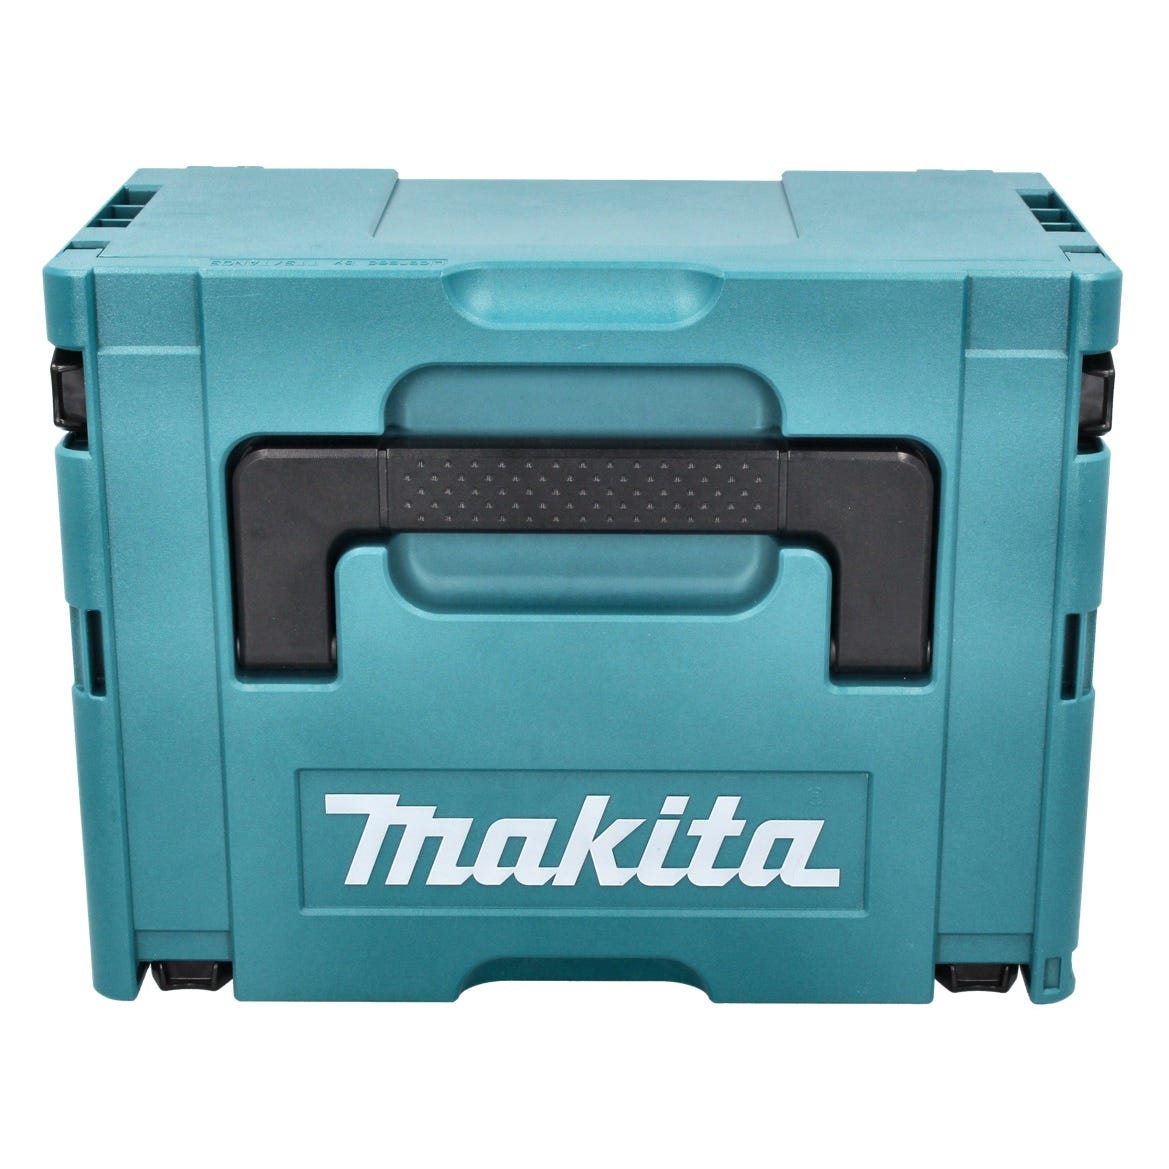 Makita DSS 610 RTJ Scie circulaire à main sans fil 18 V 165 mm + 2x Batteries BL 1850 B 5 Ah + Chargeur DC18RC + Makpac 2